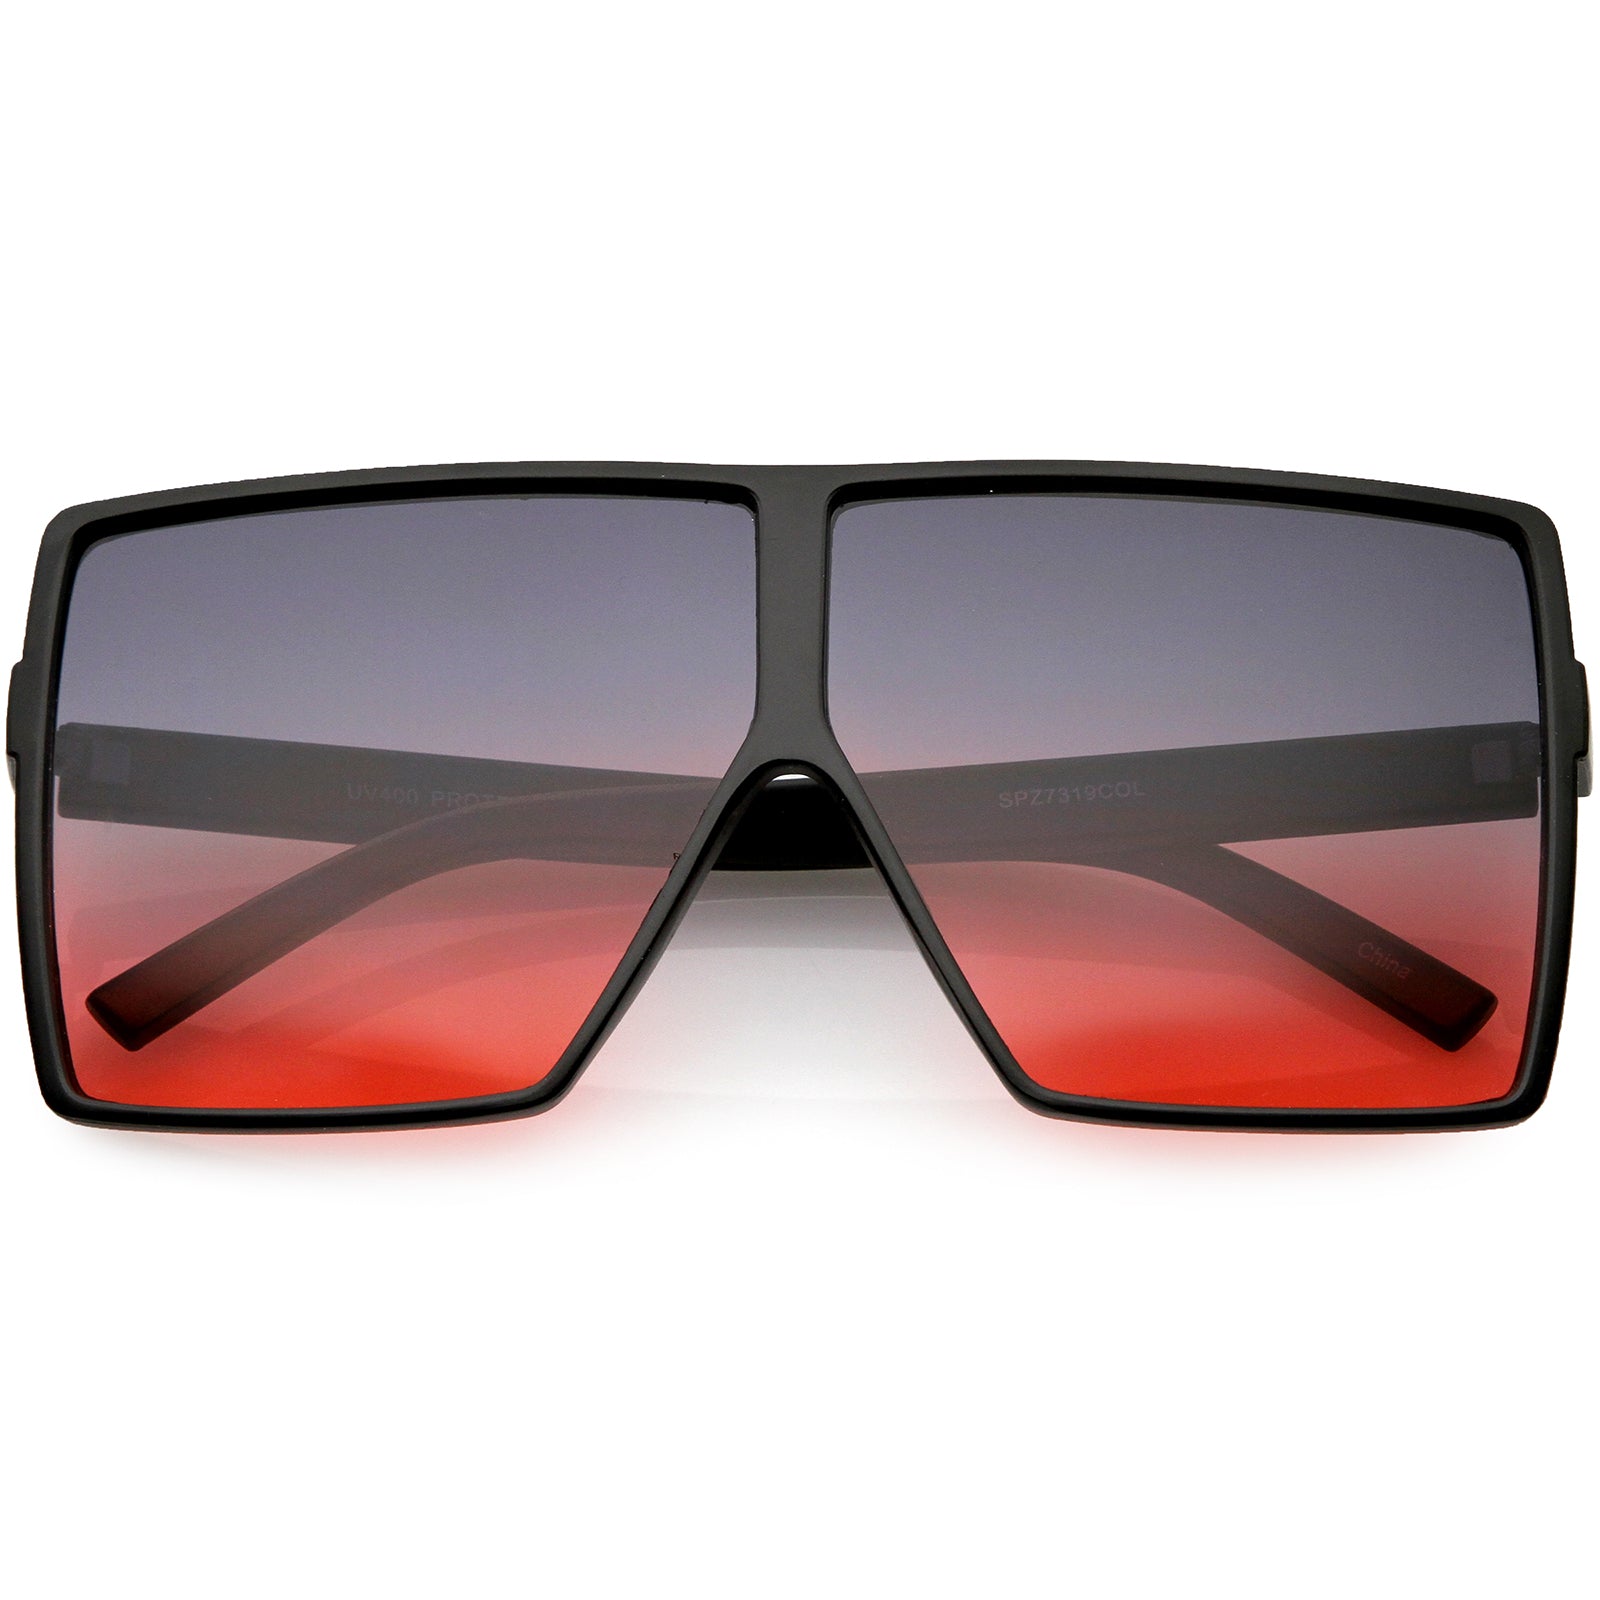 Square Oversized Sunglasses